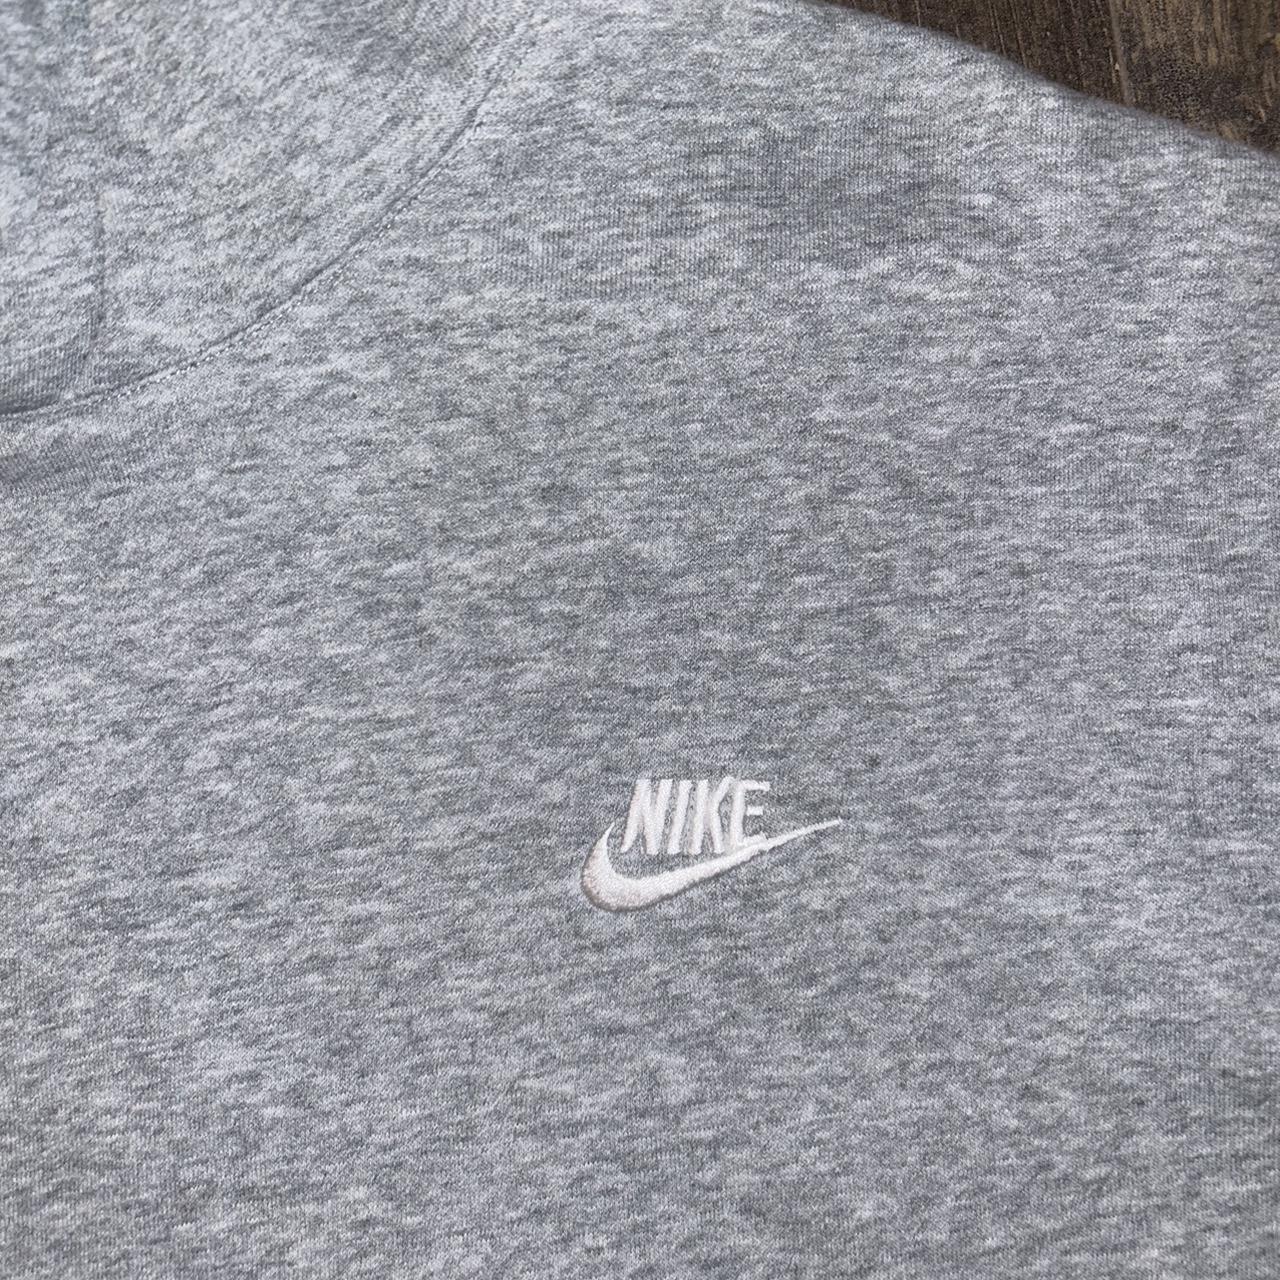 Nike X Barstool hoodie sweatshirt Size XL There’s a... - Depop